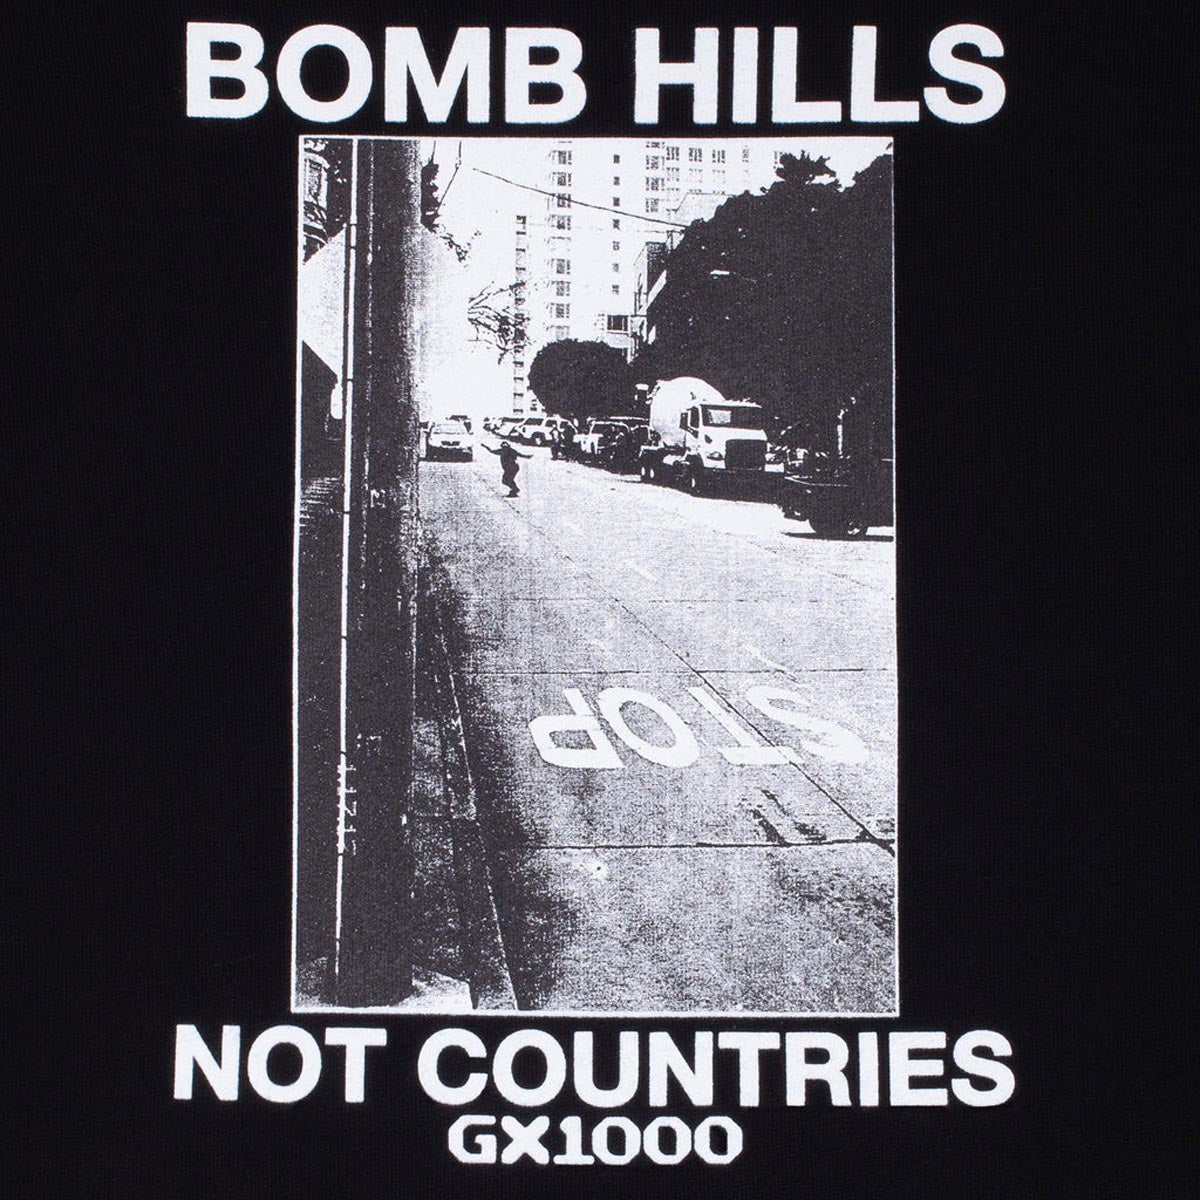 GX1000 Bomb Hills Not Countries Hoodie - Black image 2